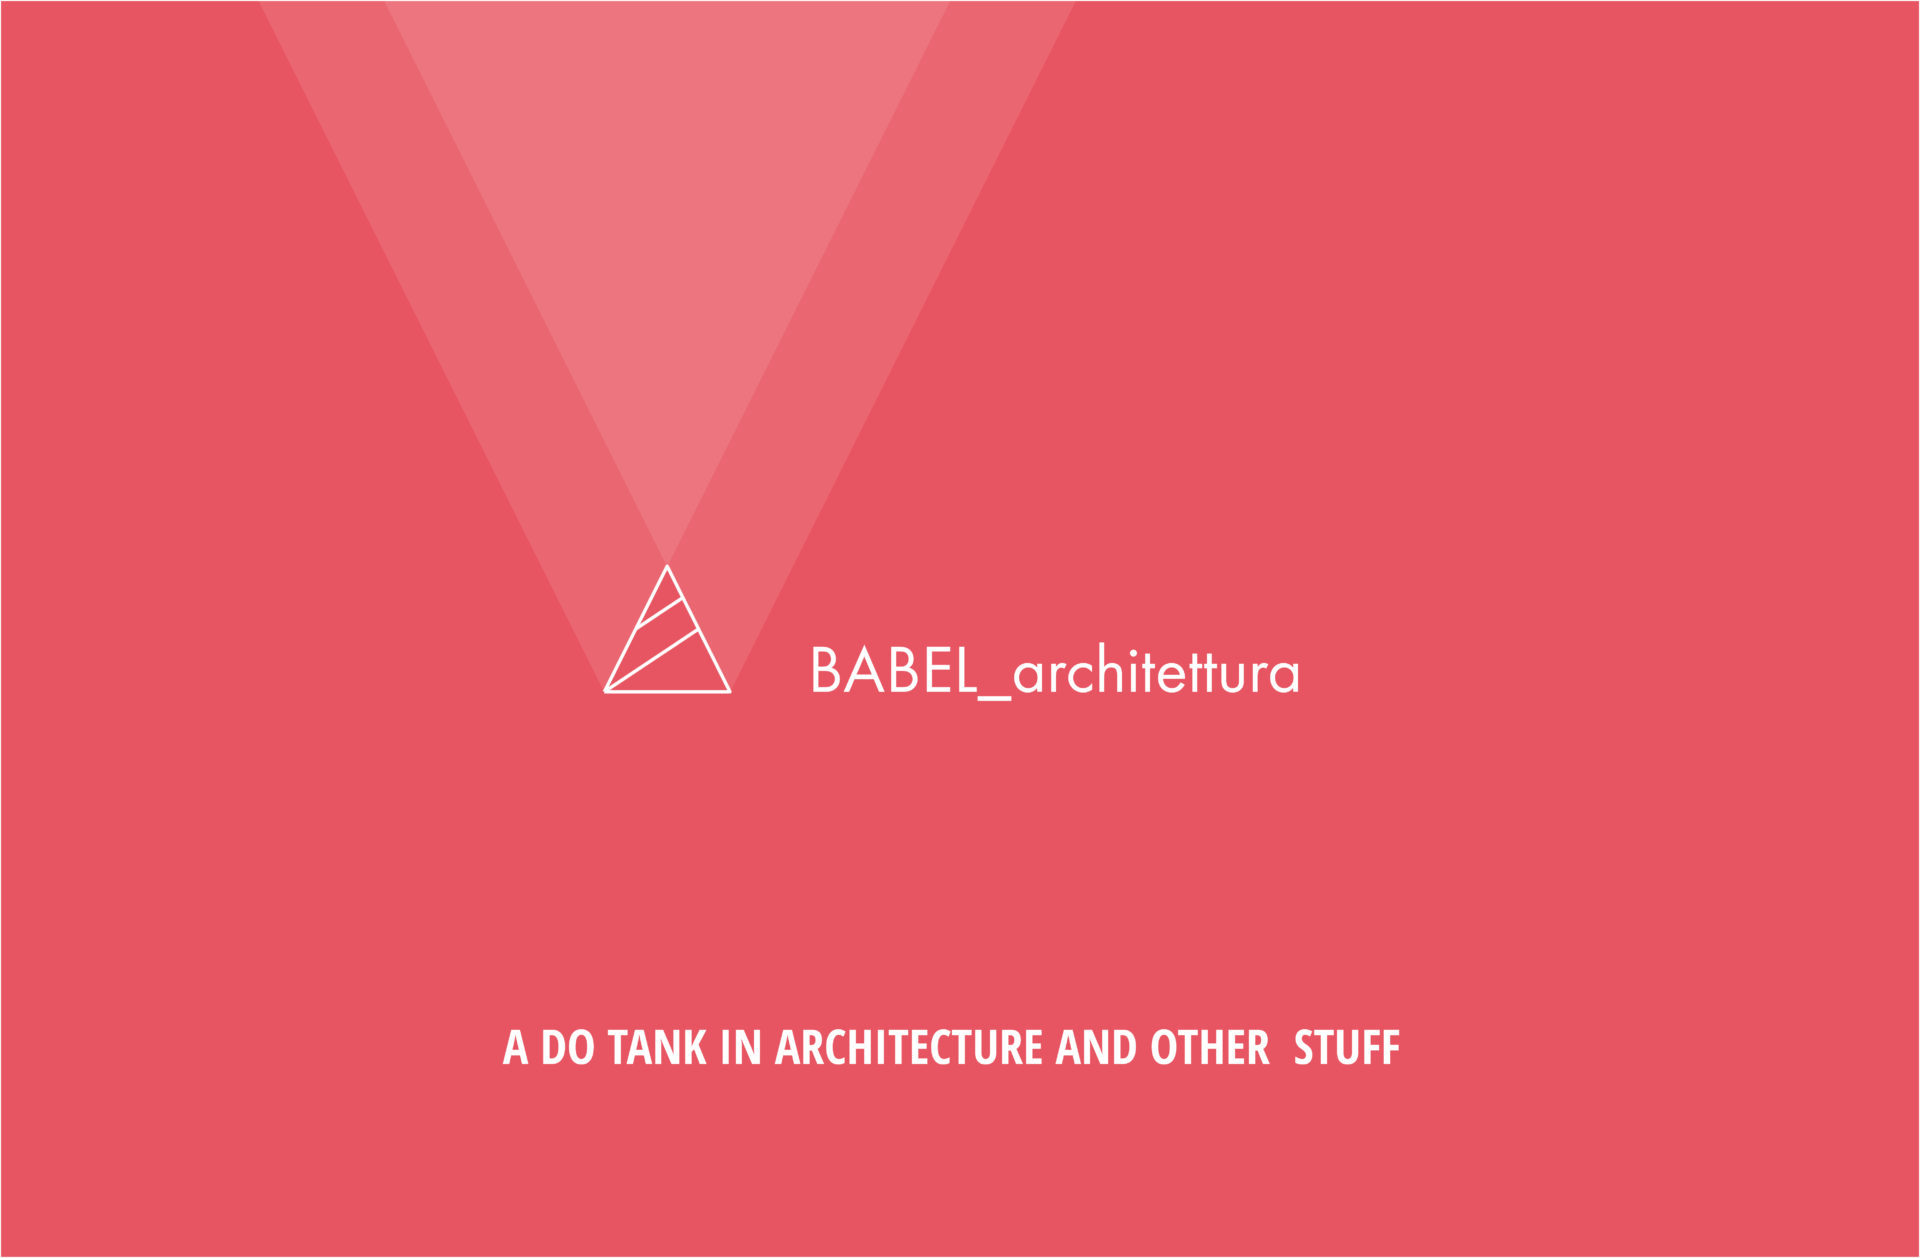 Babel Architettura